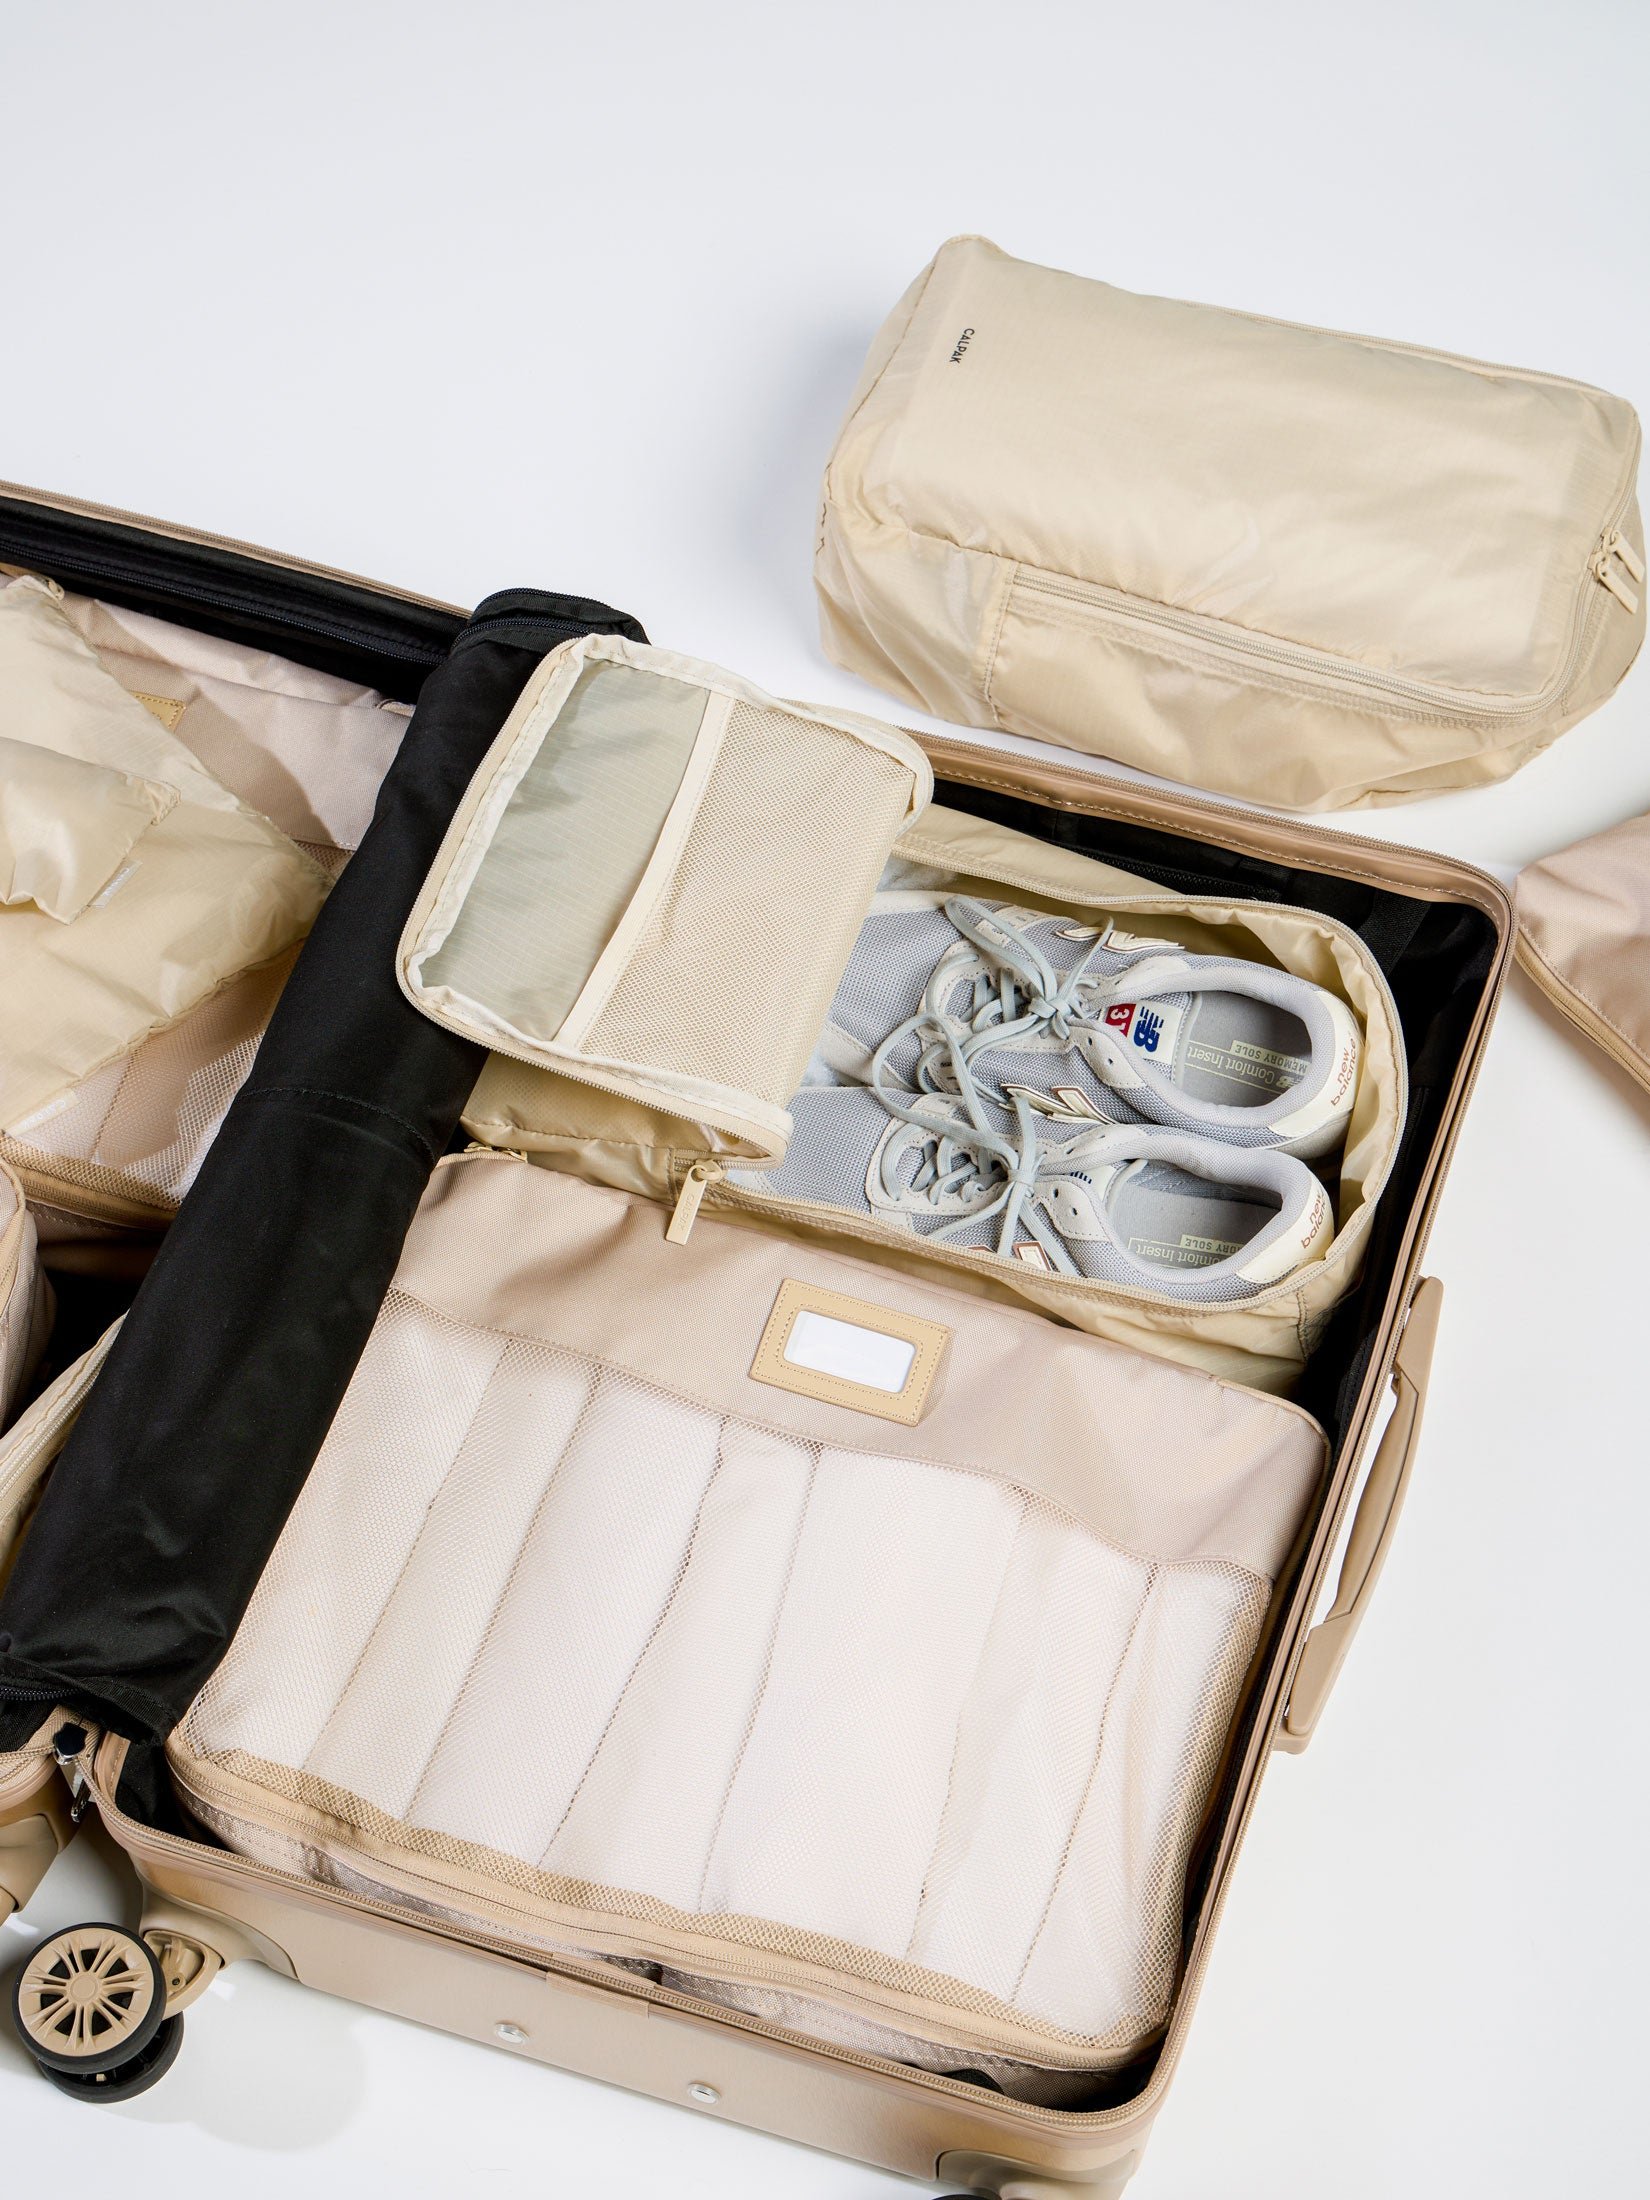 Beige CALPAK Compakt Shoe Bag within carry-on luggage